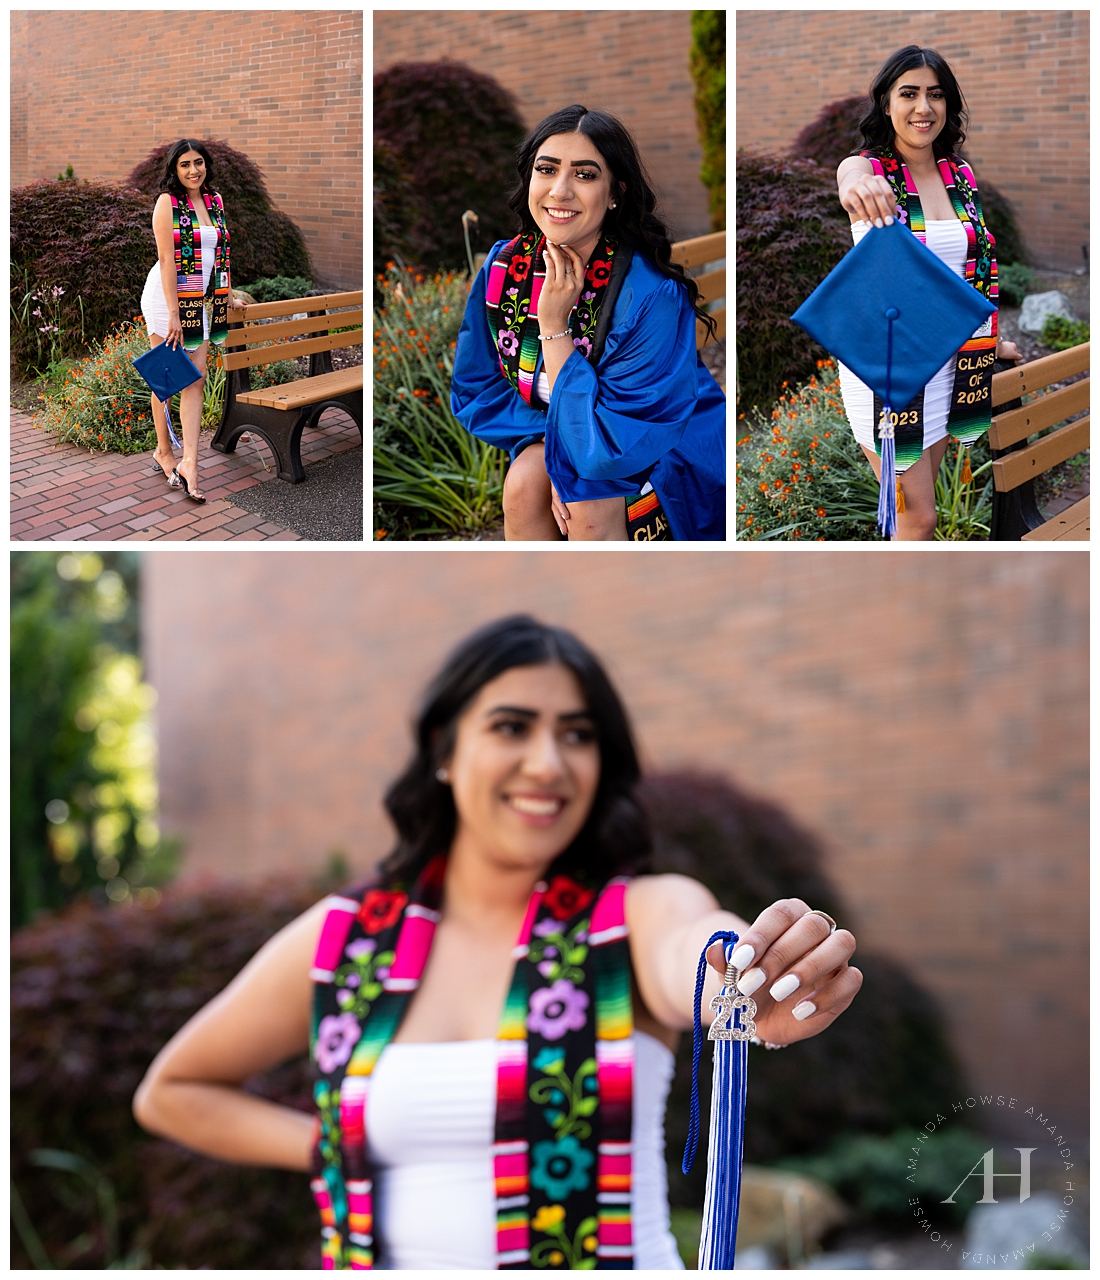 College Grad Senior Portraits in Tacoma | Photographed by the Best Tacoma, Washington Senior Photographer Amanda Howse Photography